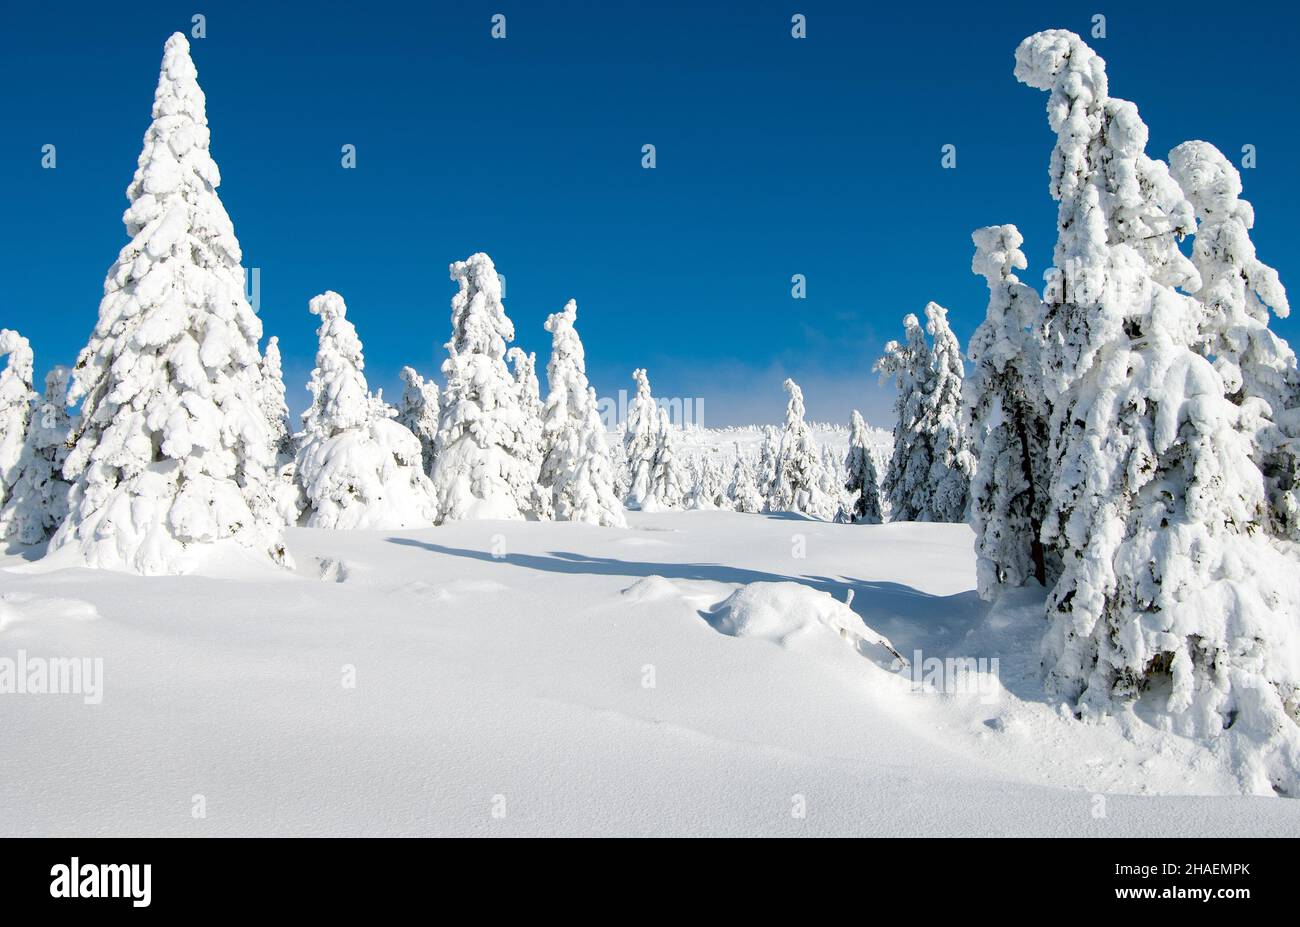 wintry landscape scenery from Krkonose - Giant mountains Stock Photo